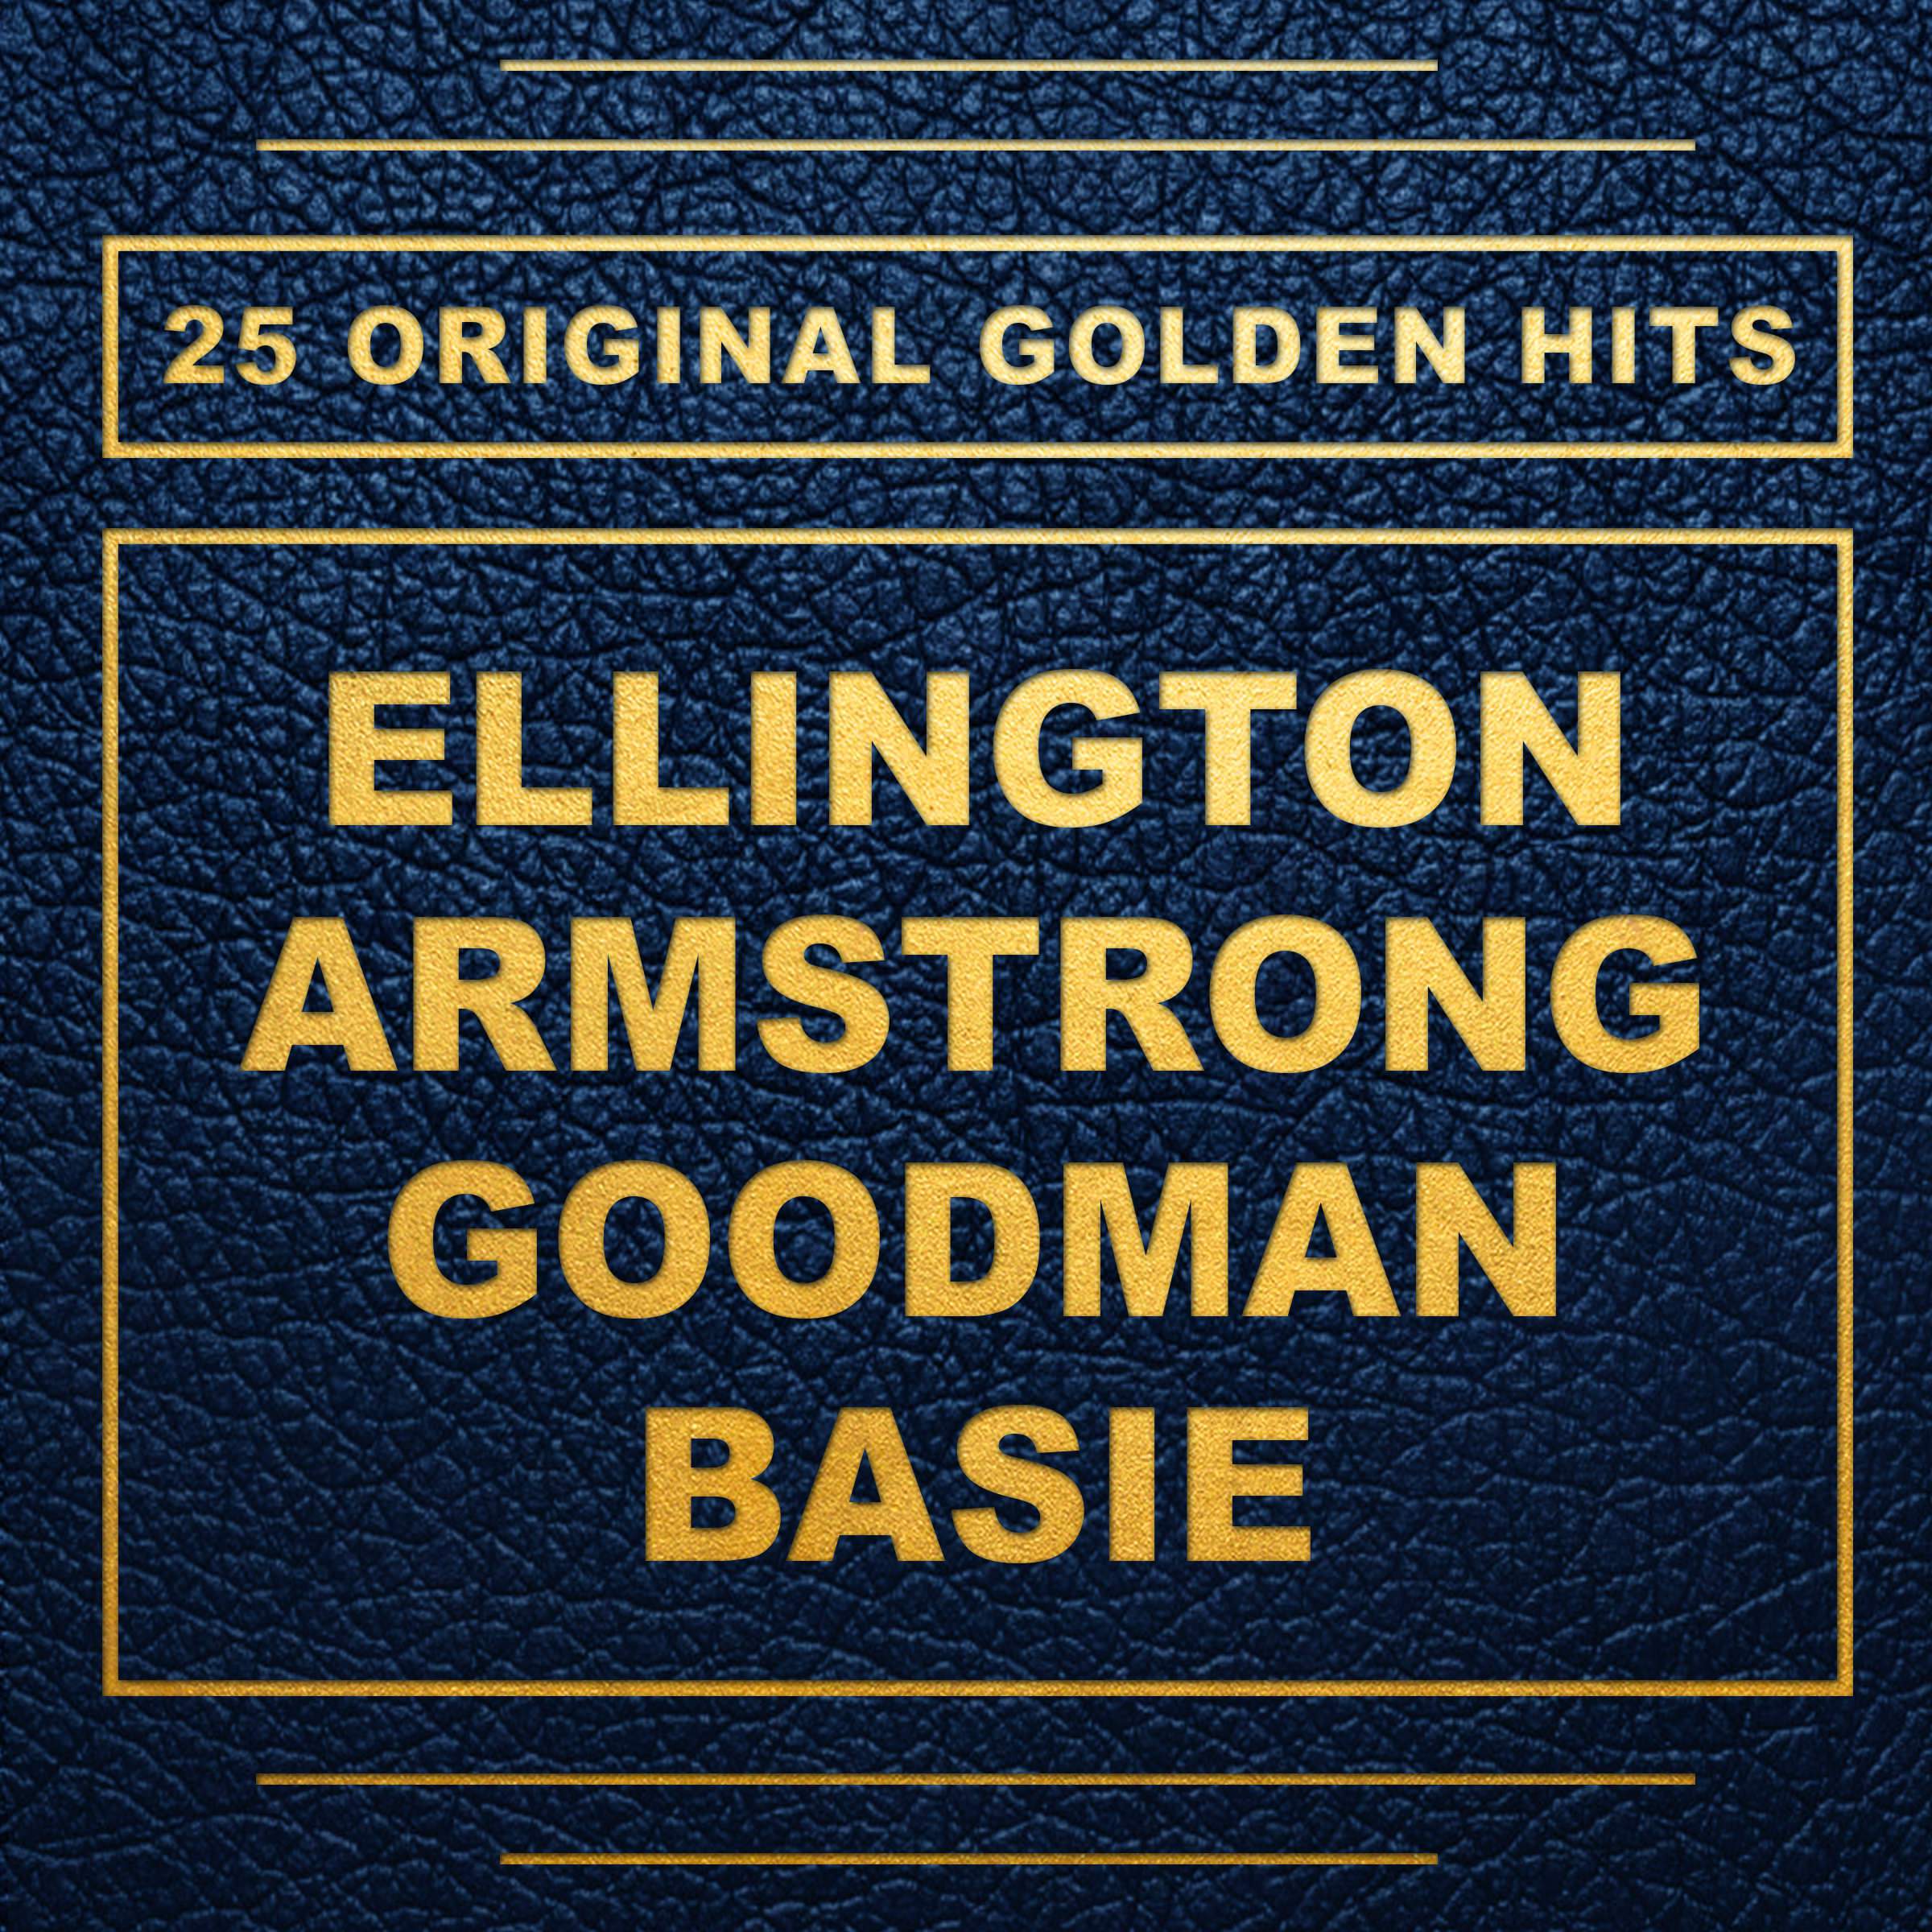 Ellington, Armstrong, Goodman & Basie